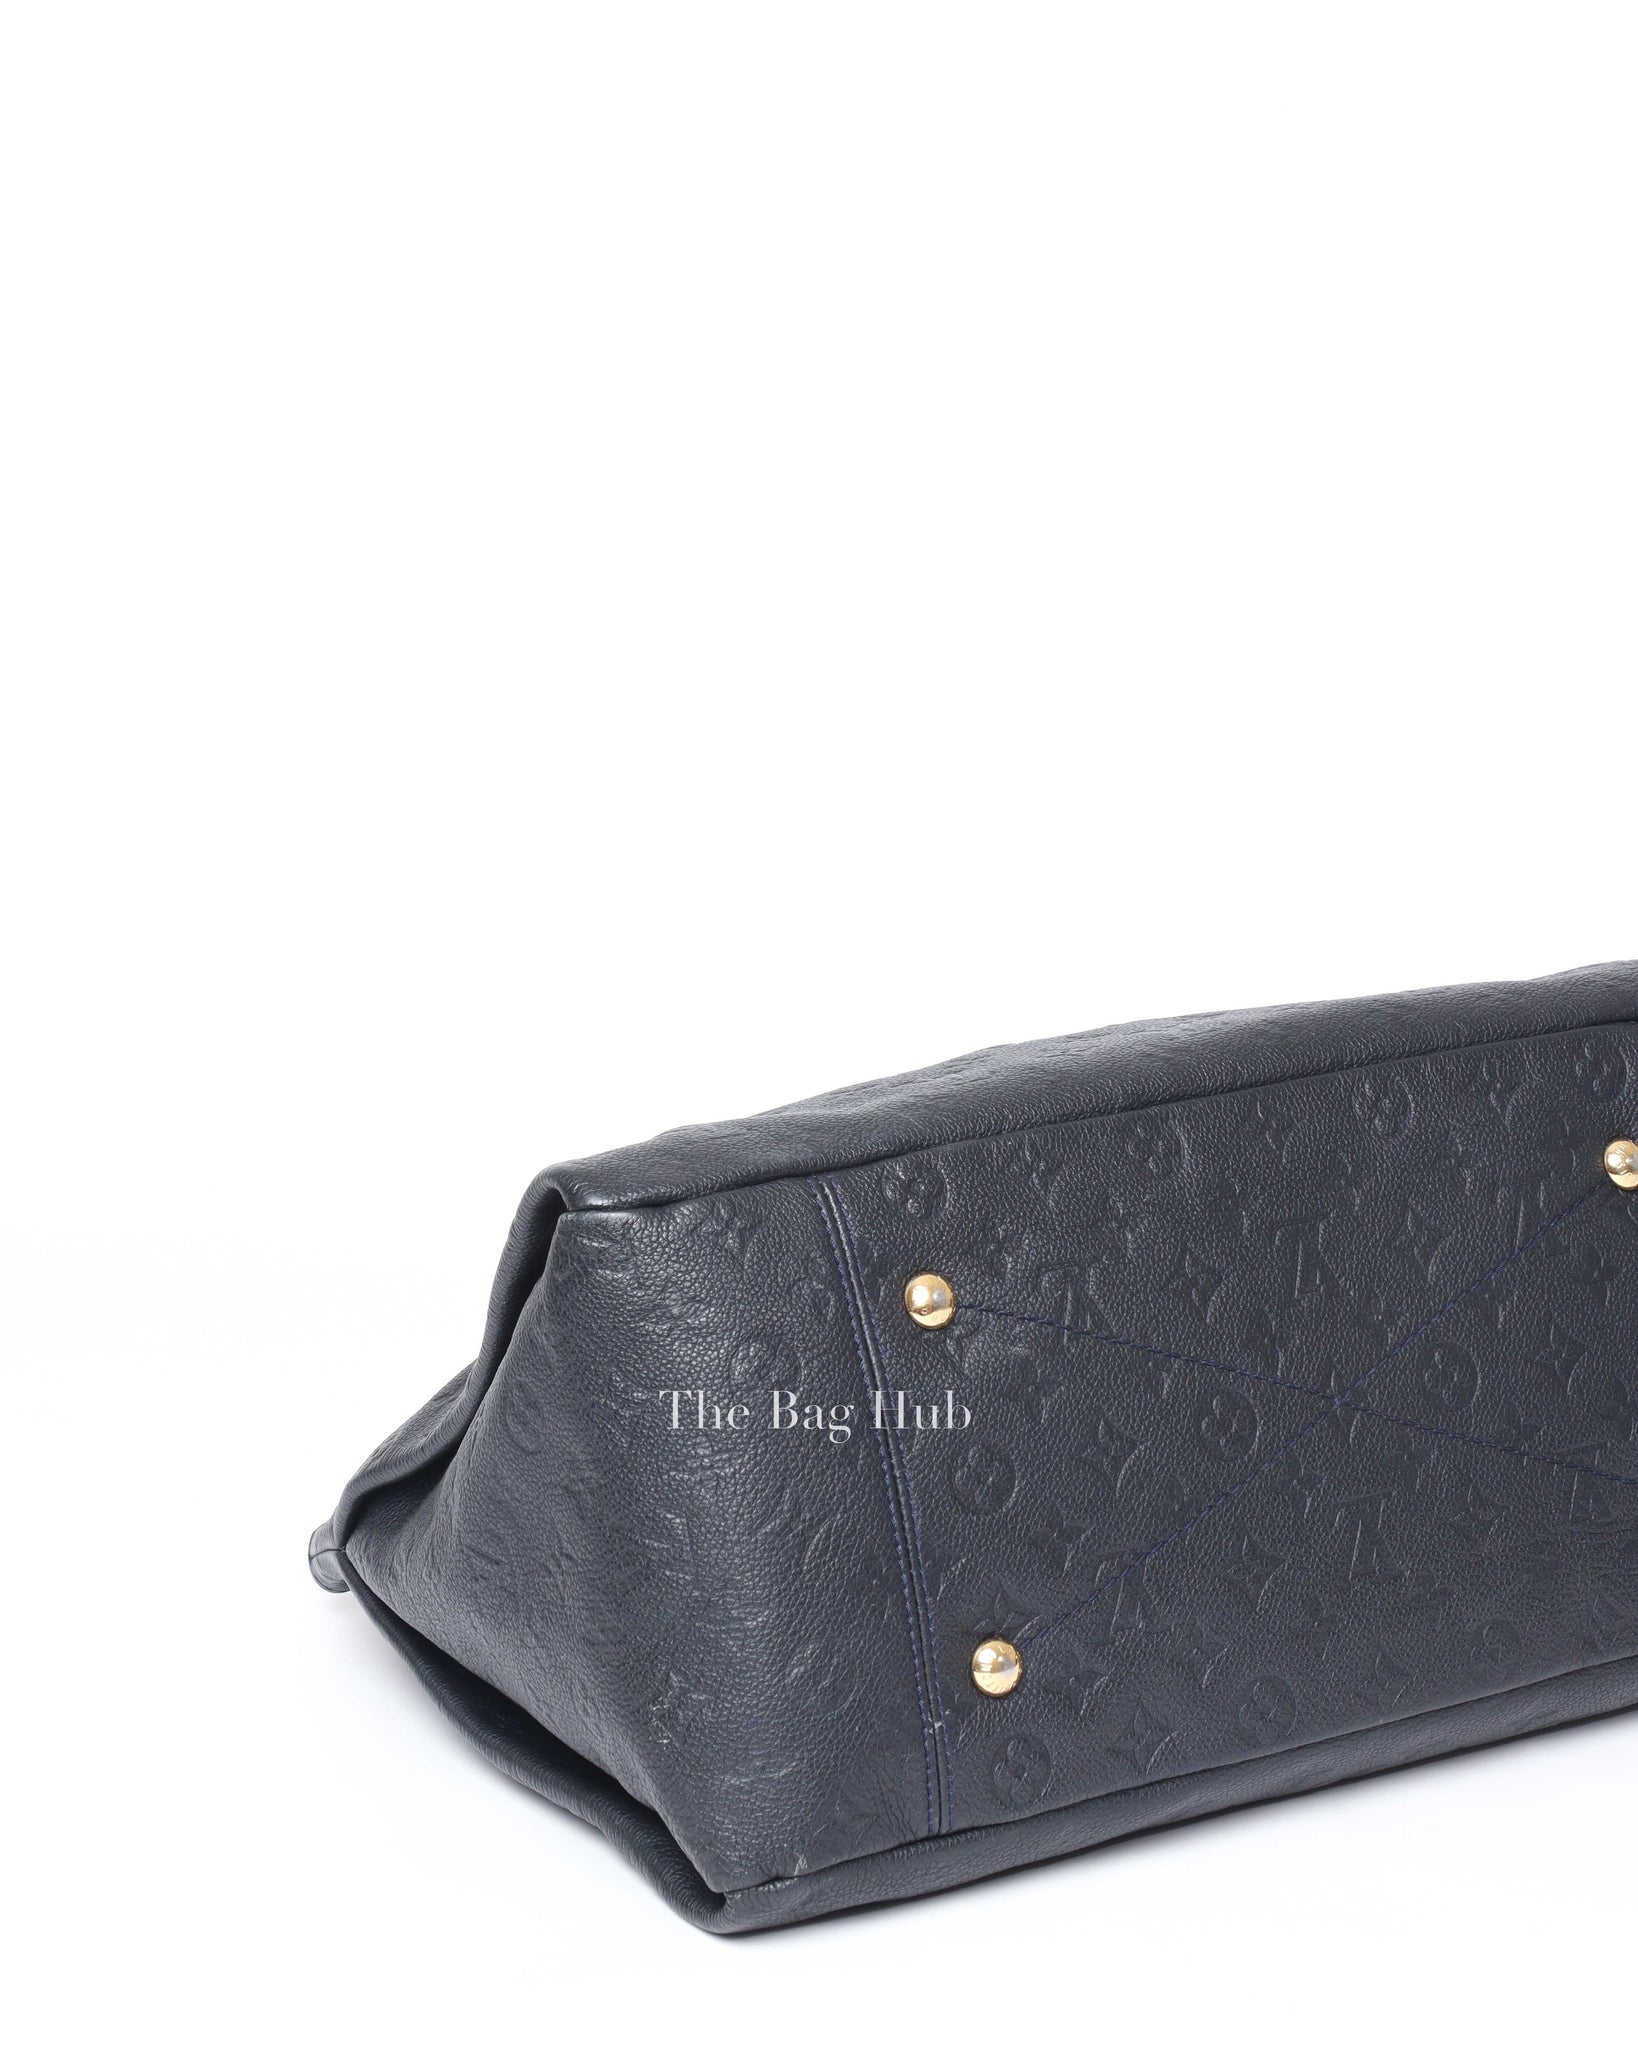 Louis Vuitton Black Monogram Empreinte Artsy MM Bag